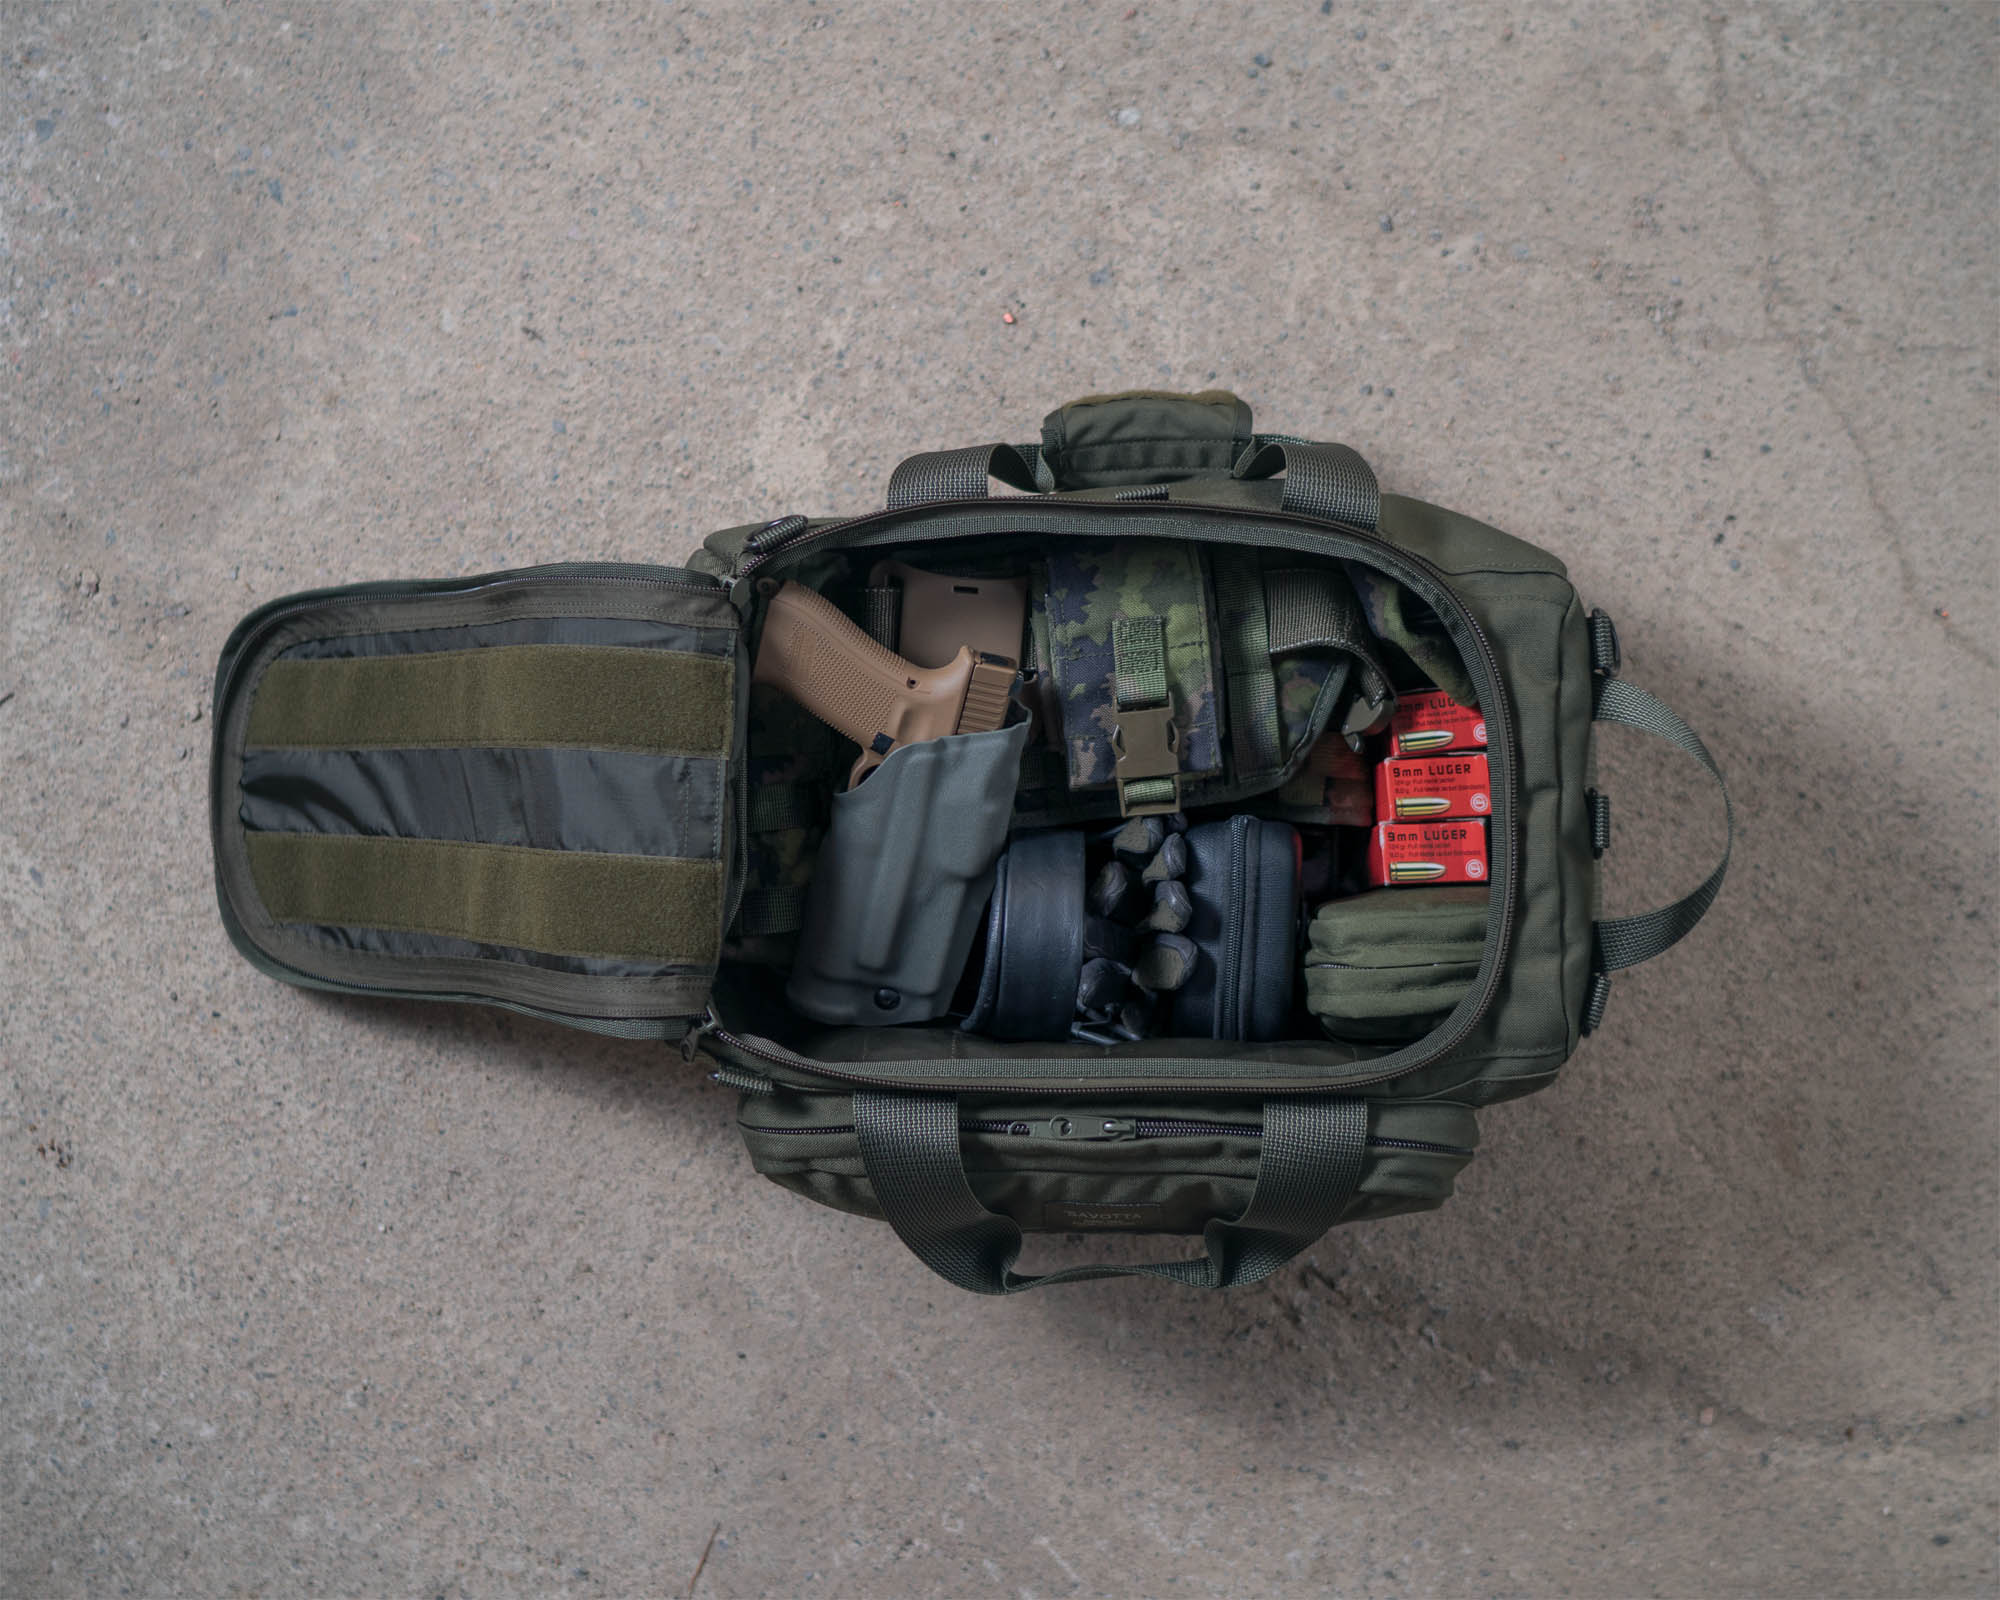 Vojaška transportna torba SAVOTTA KEIKKA 30 litrov olivna barva, SAVOTTA, B33 army shop, army shop, B33-Tactical, B33 Tactical, Trgovina z vojaško opremo, Vojaška trgovina, transportna torba, duffle bag